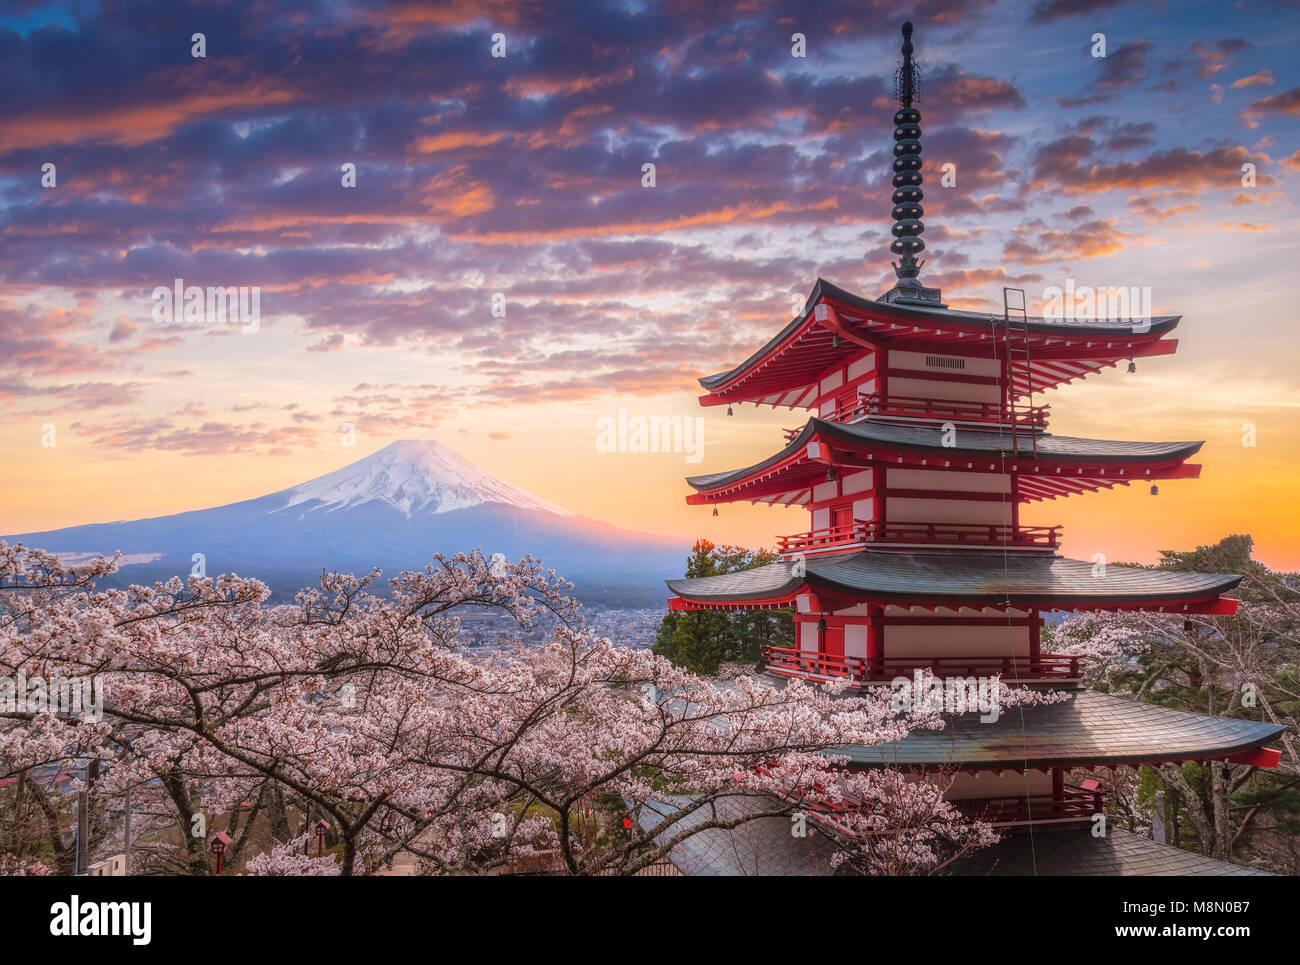 Mount Fujisan beautiful landscapes on sunset. Fujiyoshida, Japan at Chureito Pagoda and Mt. Fuji in the spring with cherry blossoms. Stock Photo